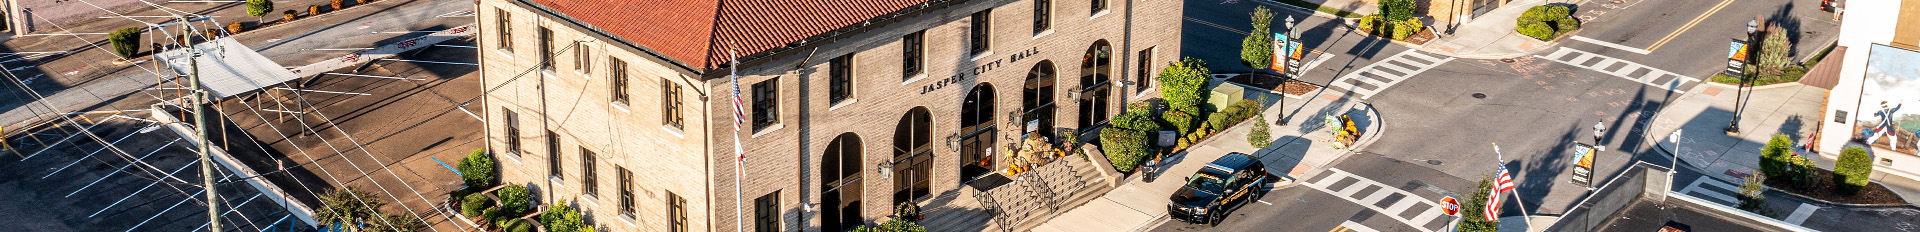 Jasper City Hall